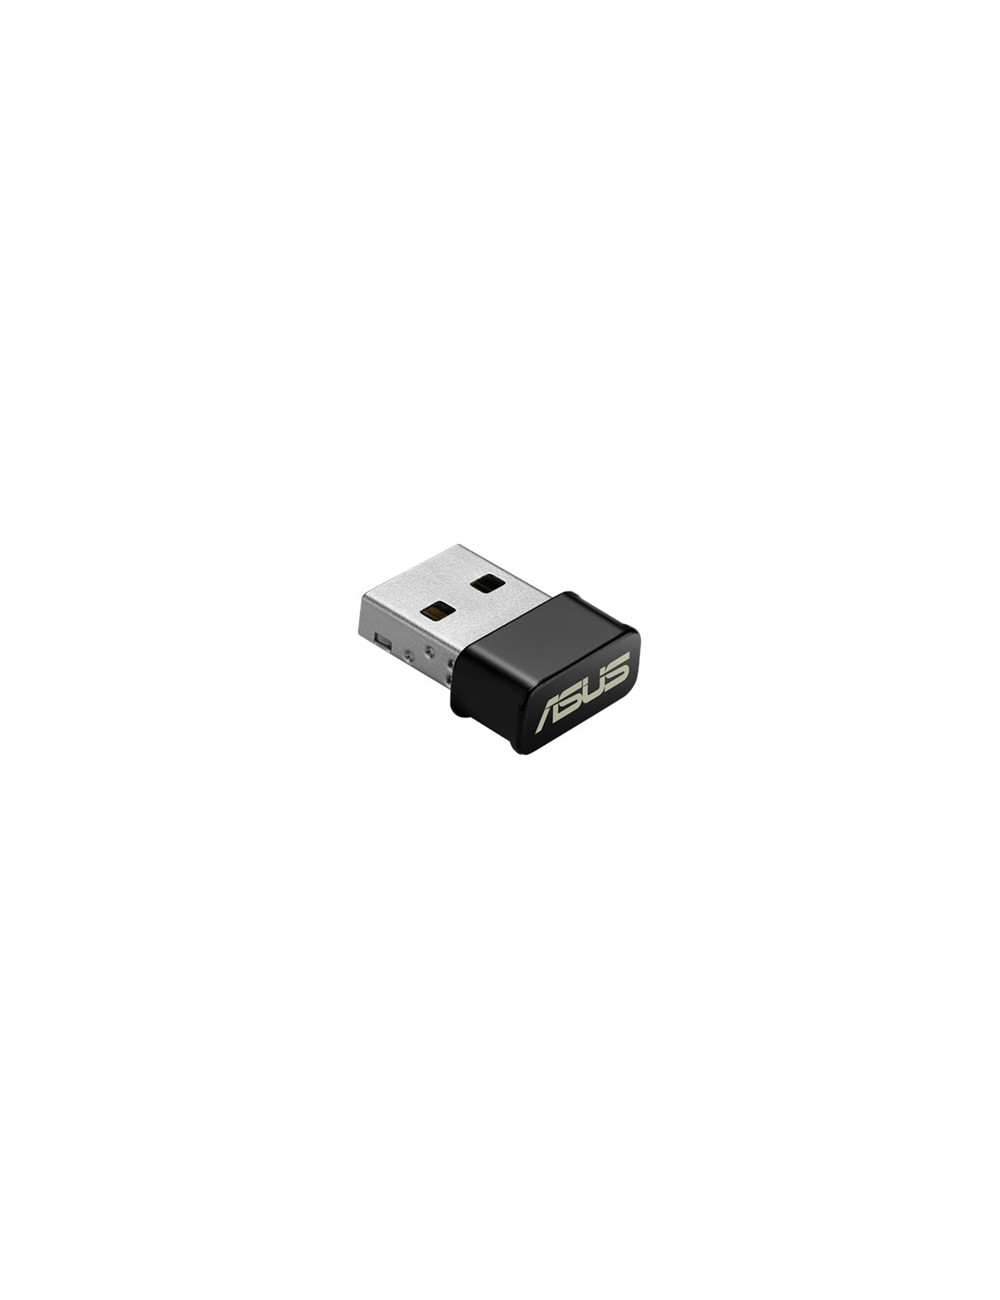 Asus USB-AC53 NANO AC1200 Dual-band USB MU-MIMO Wi-Fi Adapter